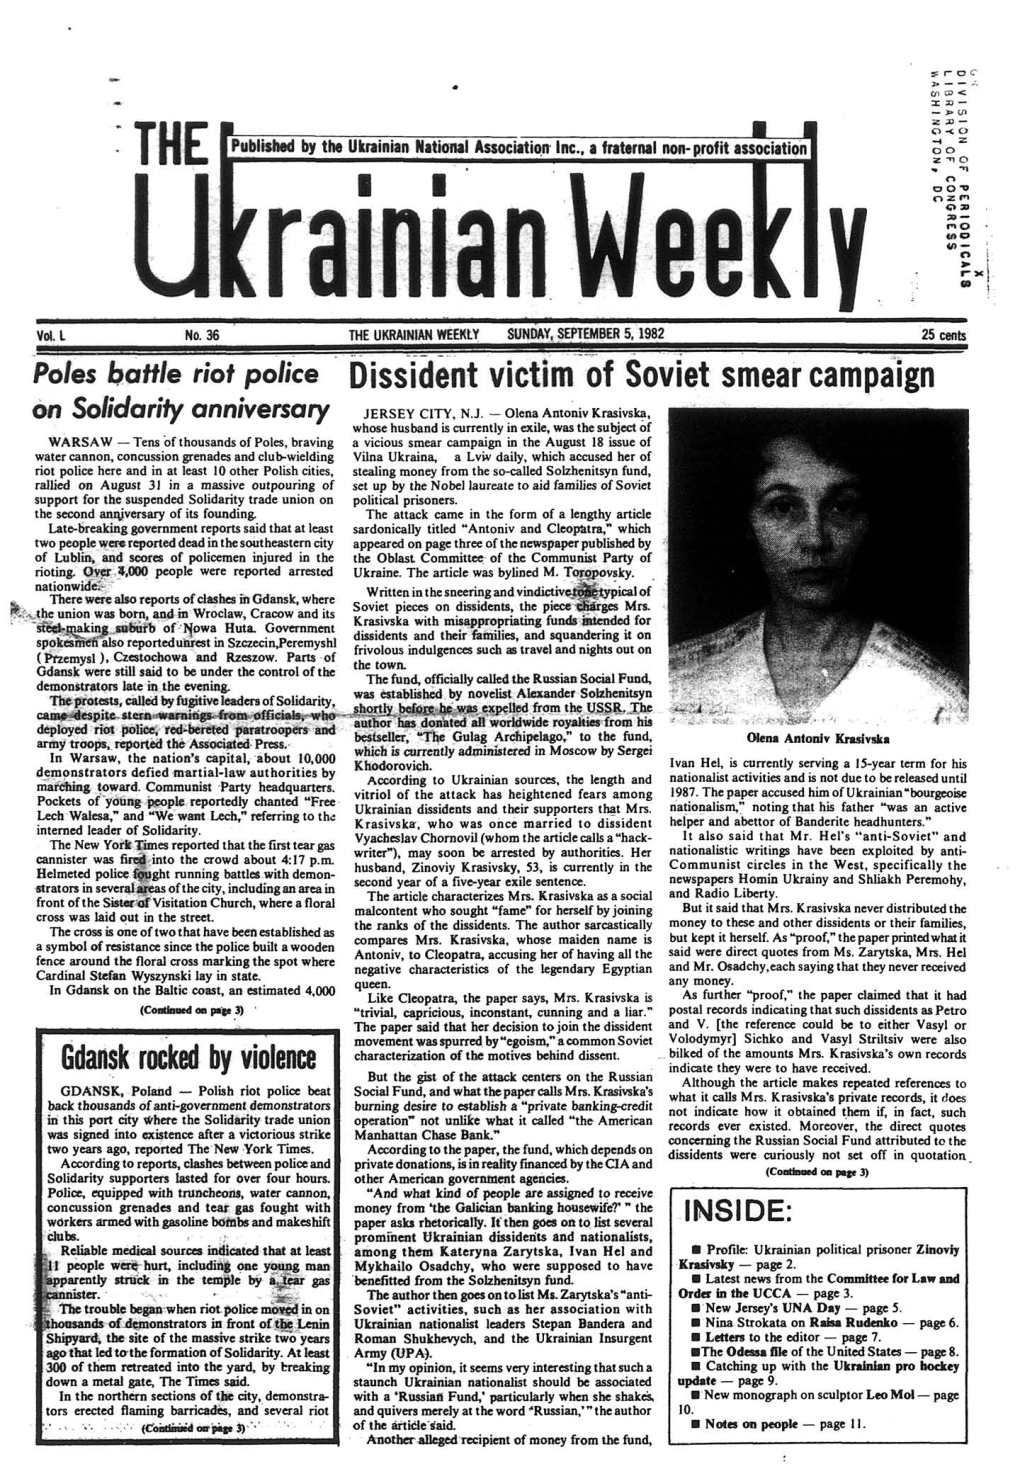 The Ukrainian Weekly 1982, No.36